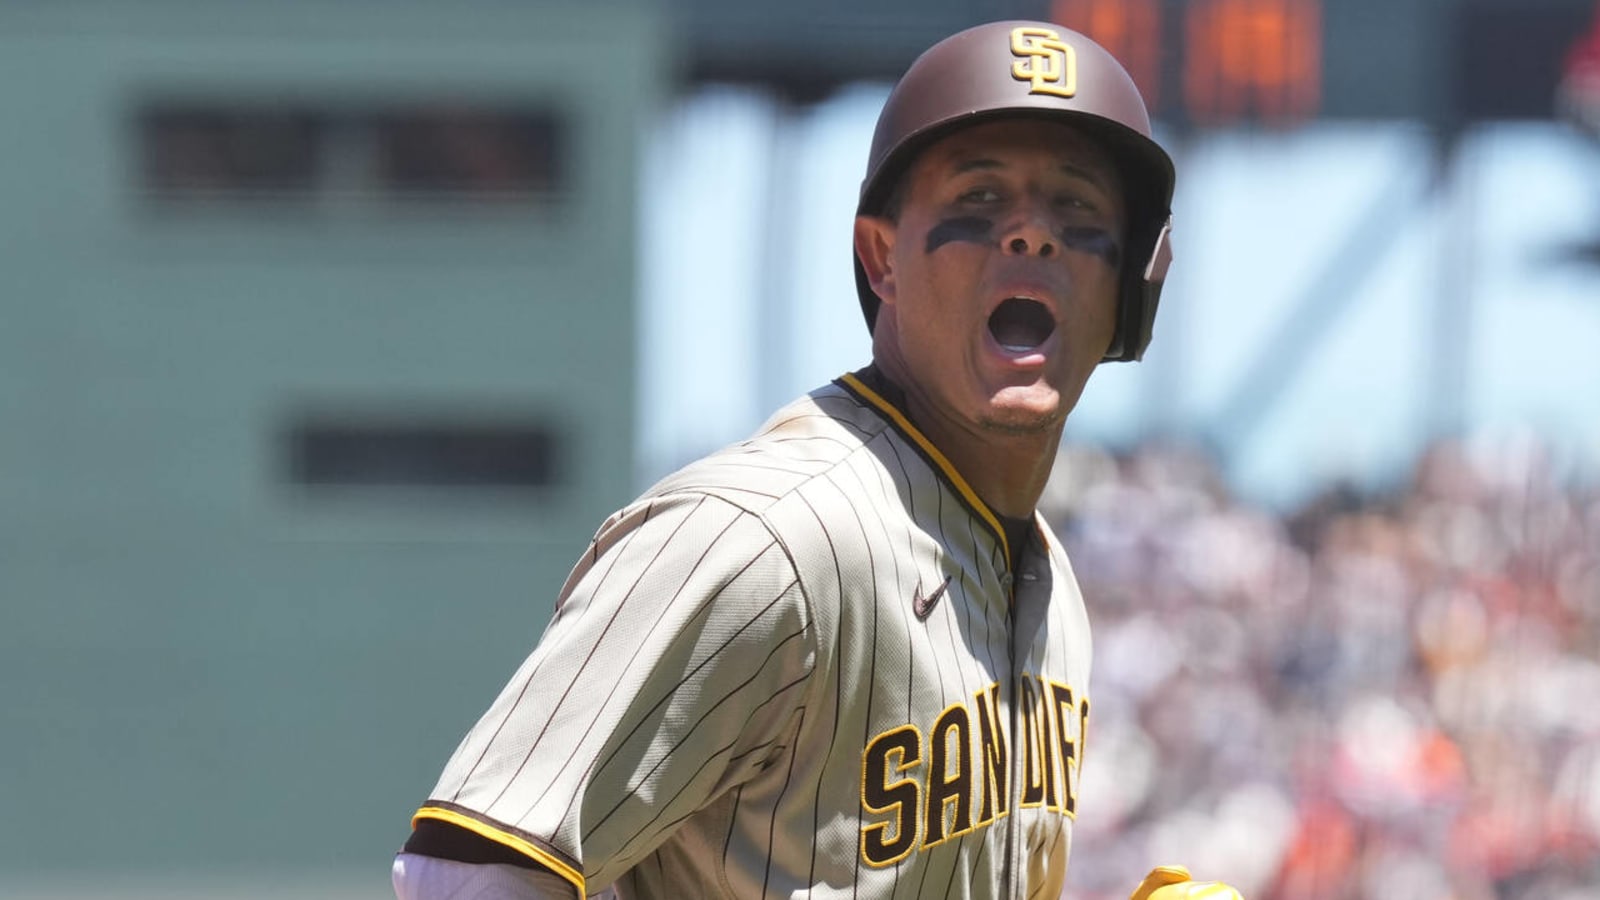 Watch: Padres star Manny Machado crushes 99 mph pitch 425 feet